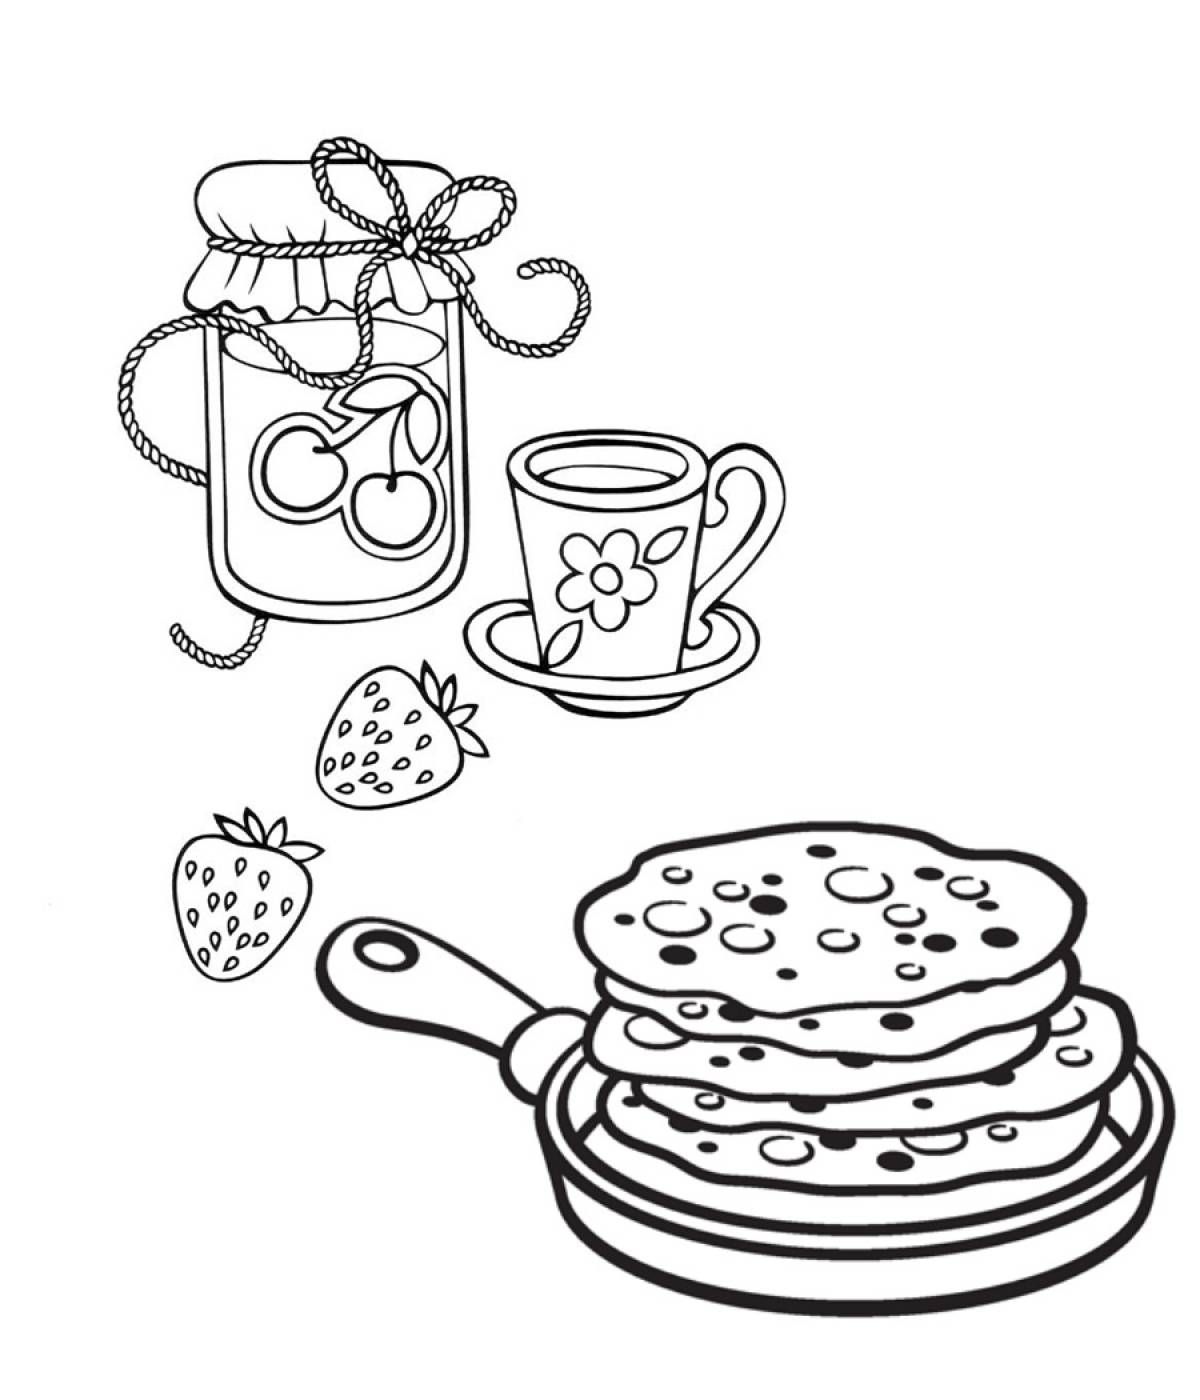 Pancakes with tea